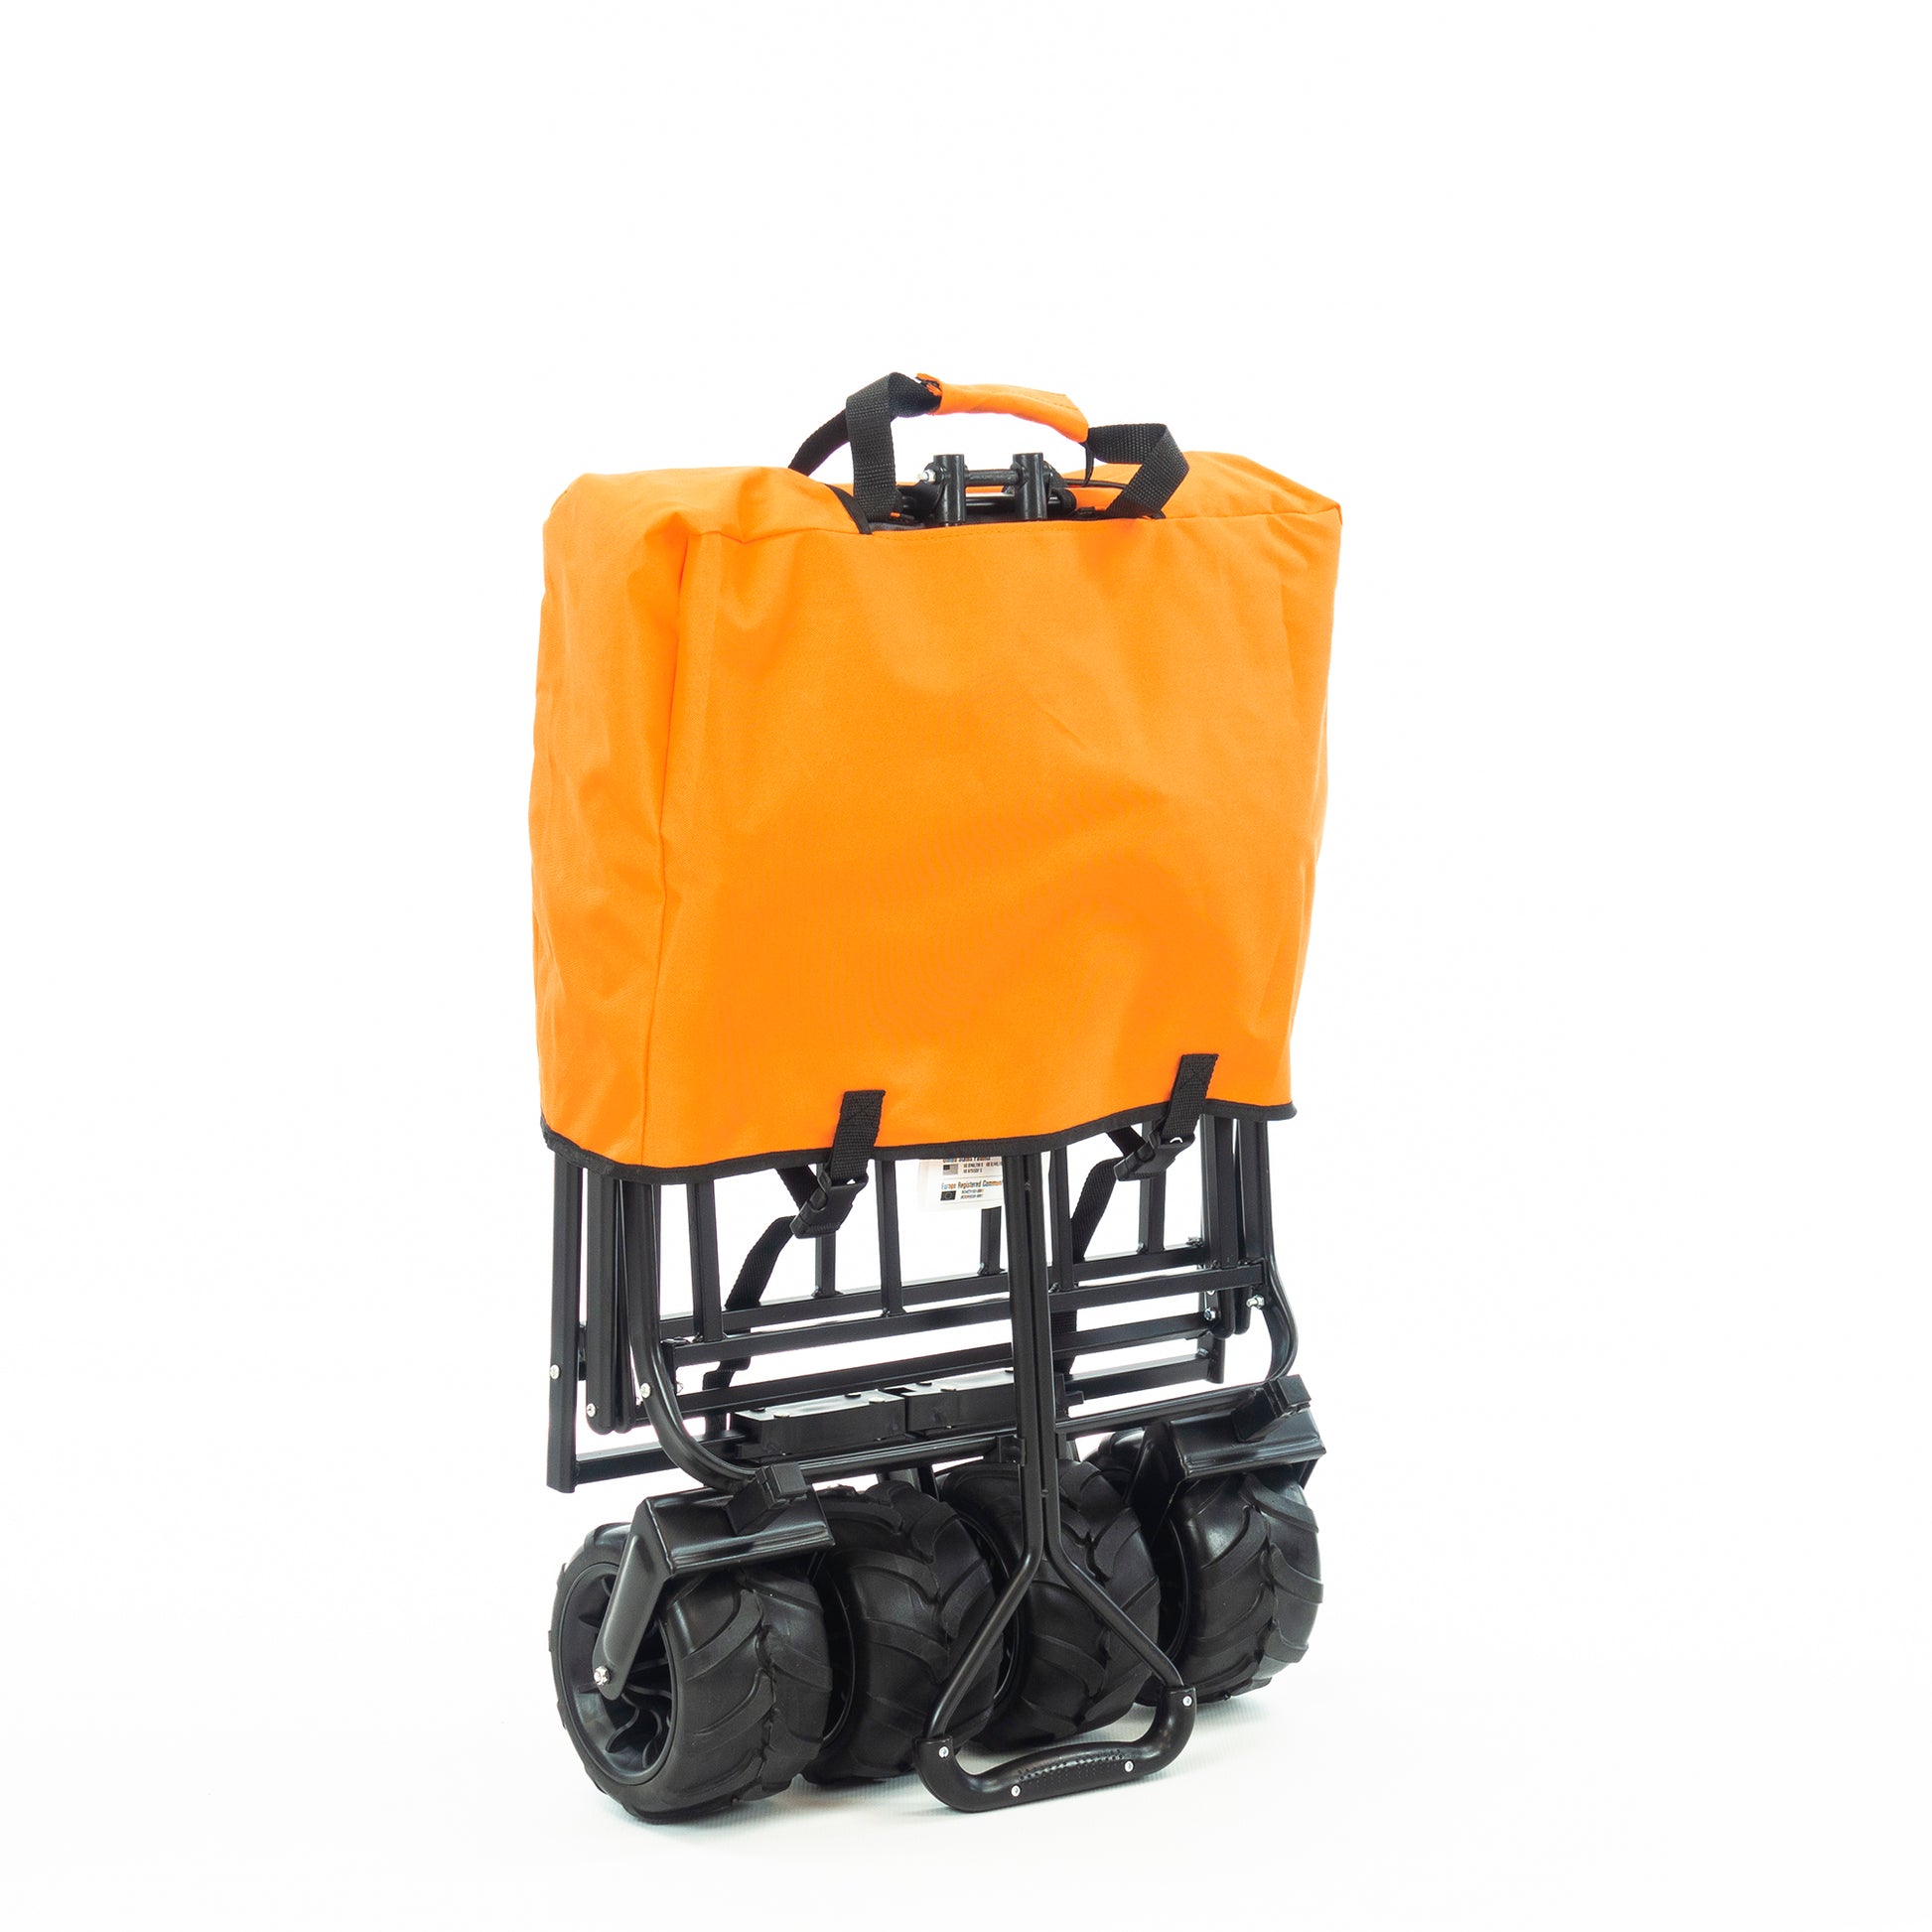 all-terrain-folding-wagon-gray-orange